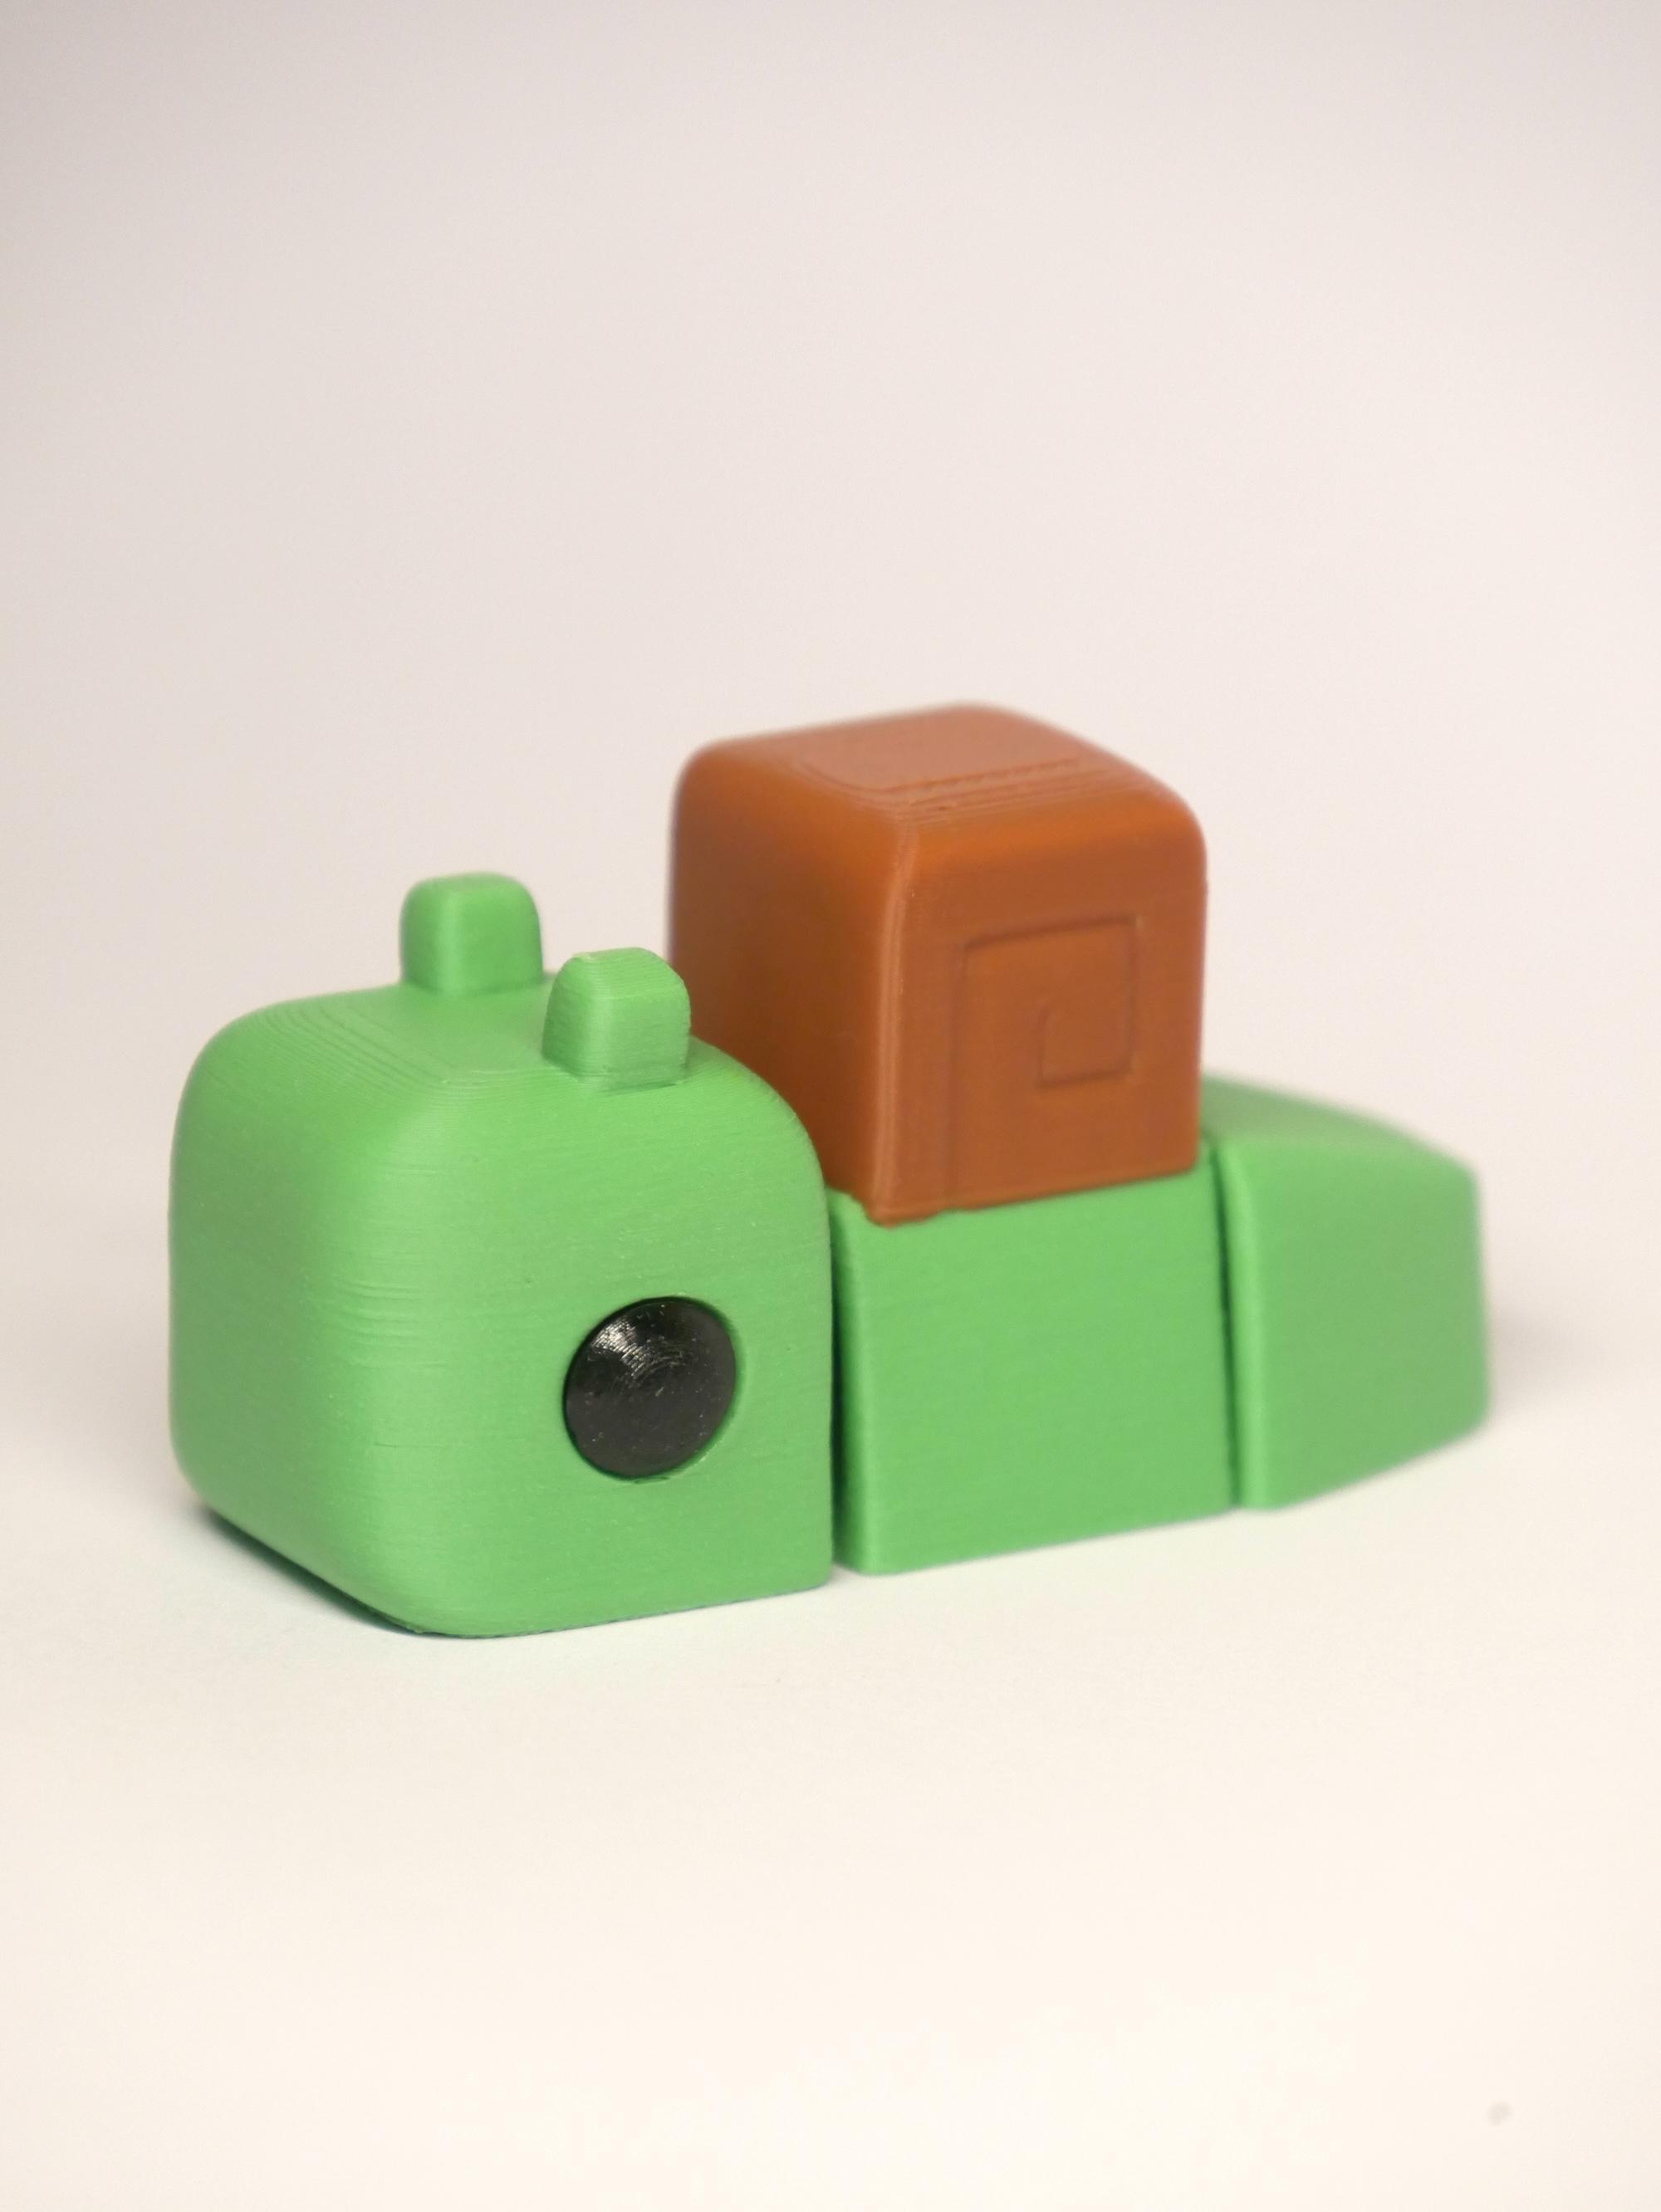 Articulated Cube Snail 3d model